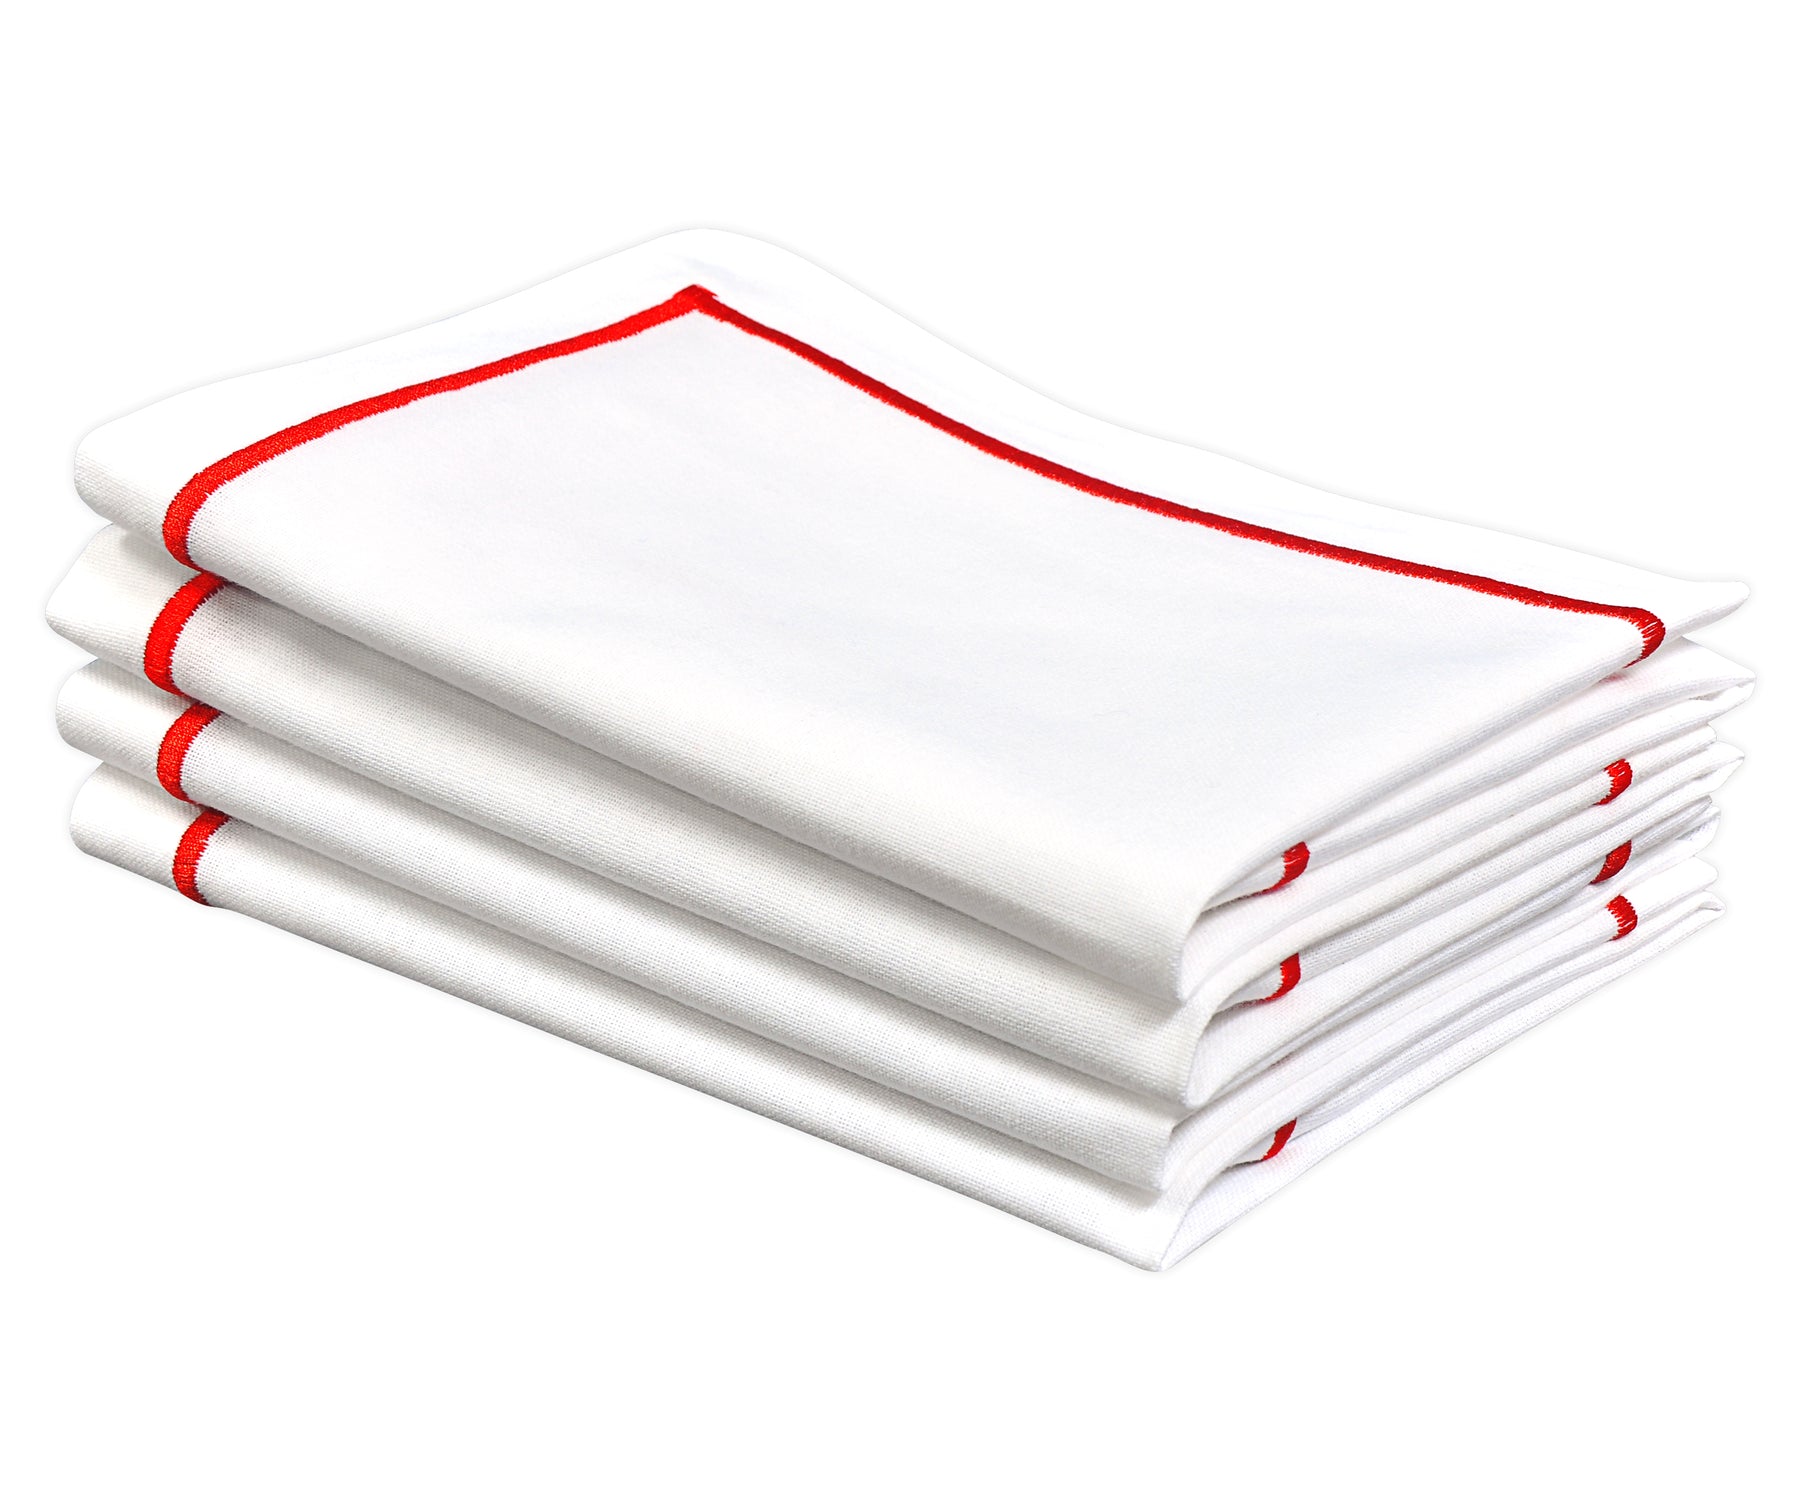 Neatly folded dinner napkins, ready to enhance the dining experience.